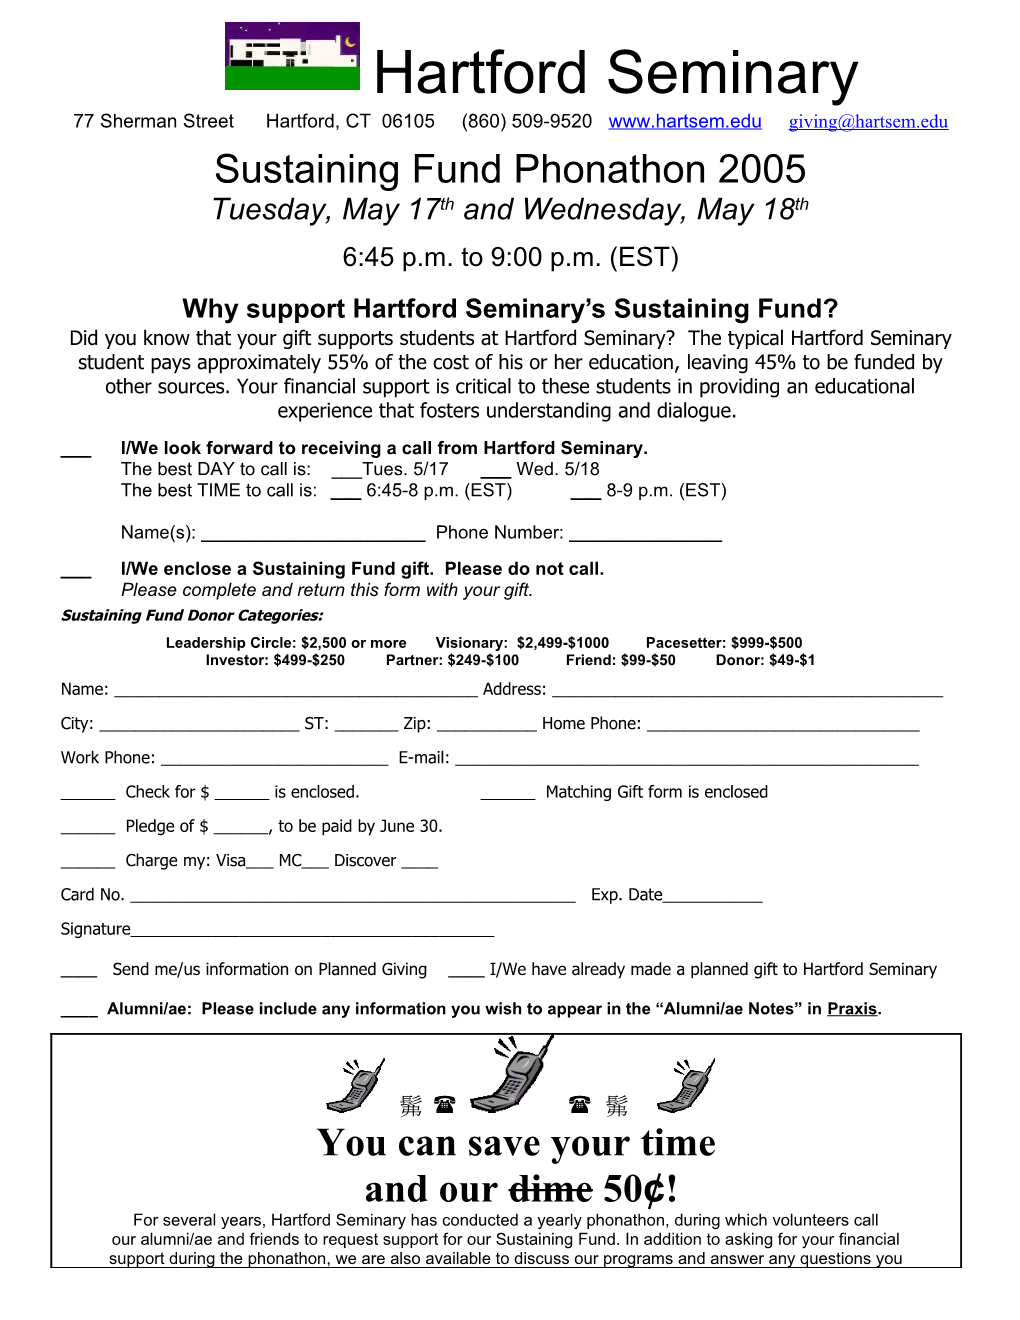 Why Support Hartford Seminary S Sustaining Fund?